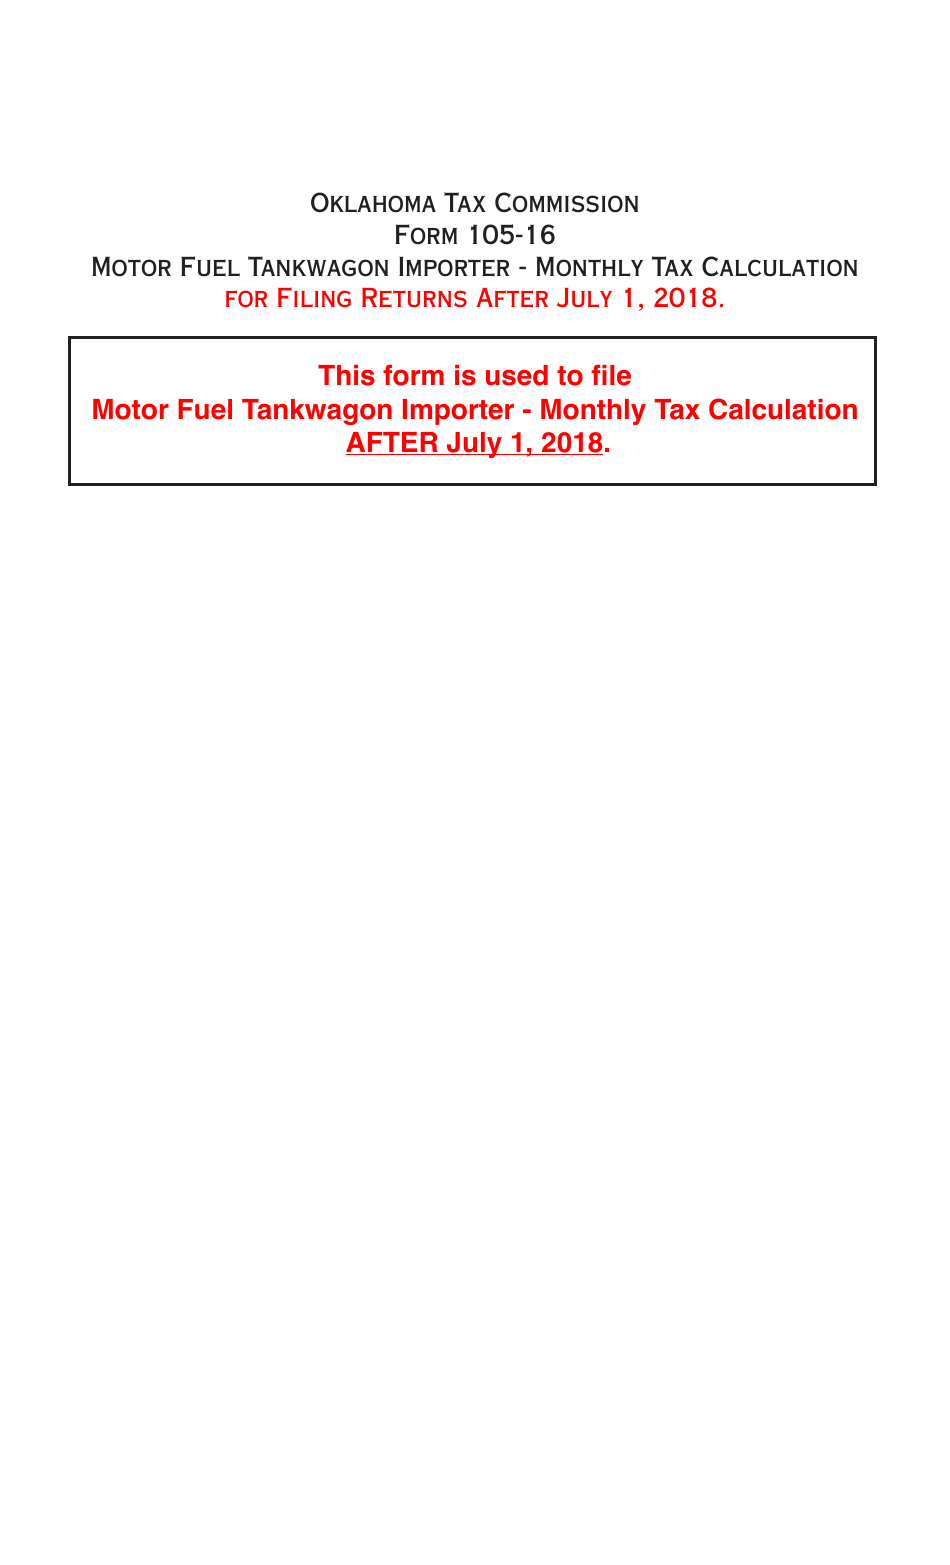 OTC Form 105-16 Motor Fuel Tankwagon Importer - Monthly Tax Calculation - Oklahoma, Page 1